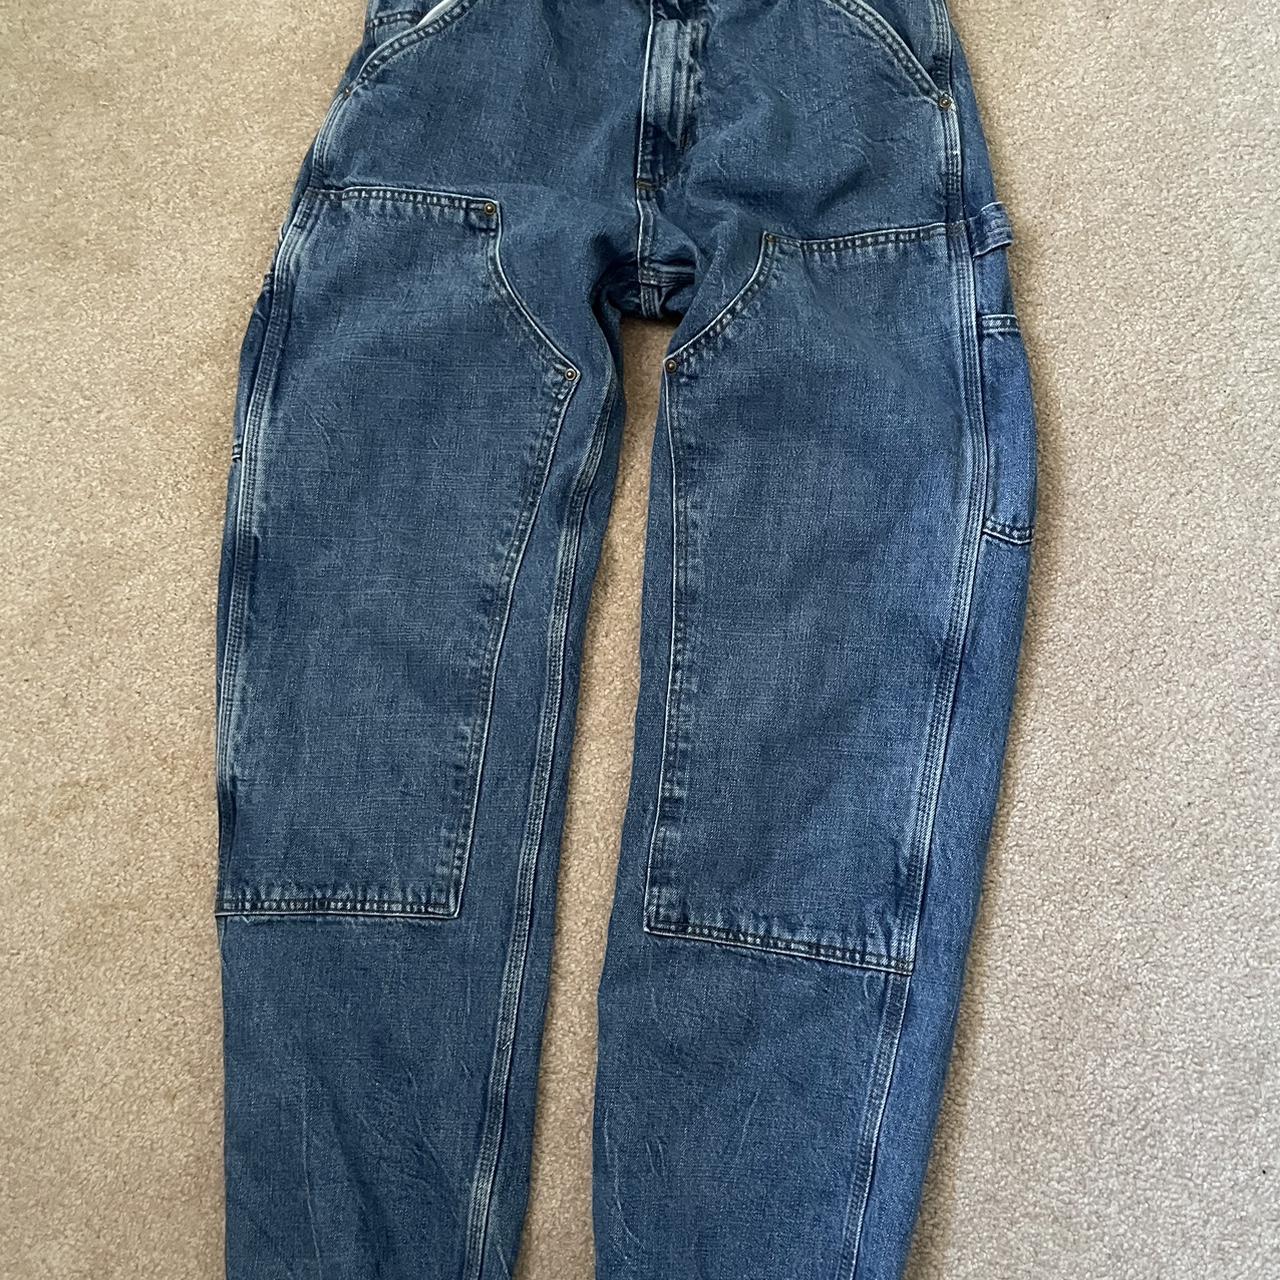 double knee carpenter jeans size 30x30 #doubleknee... - Depop